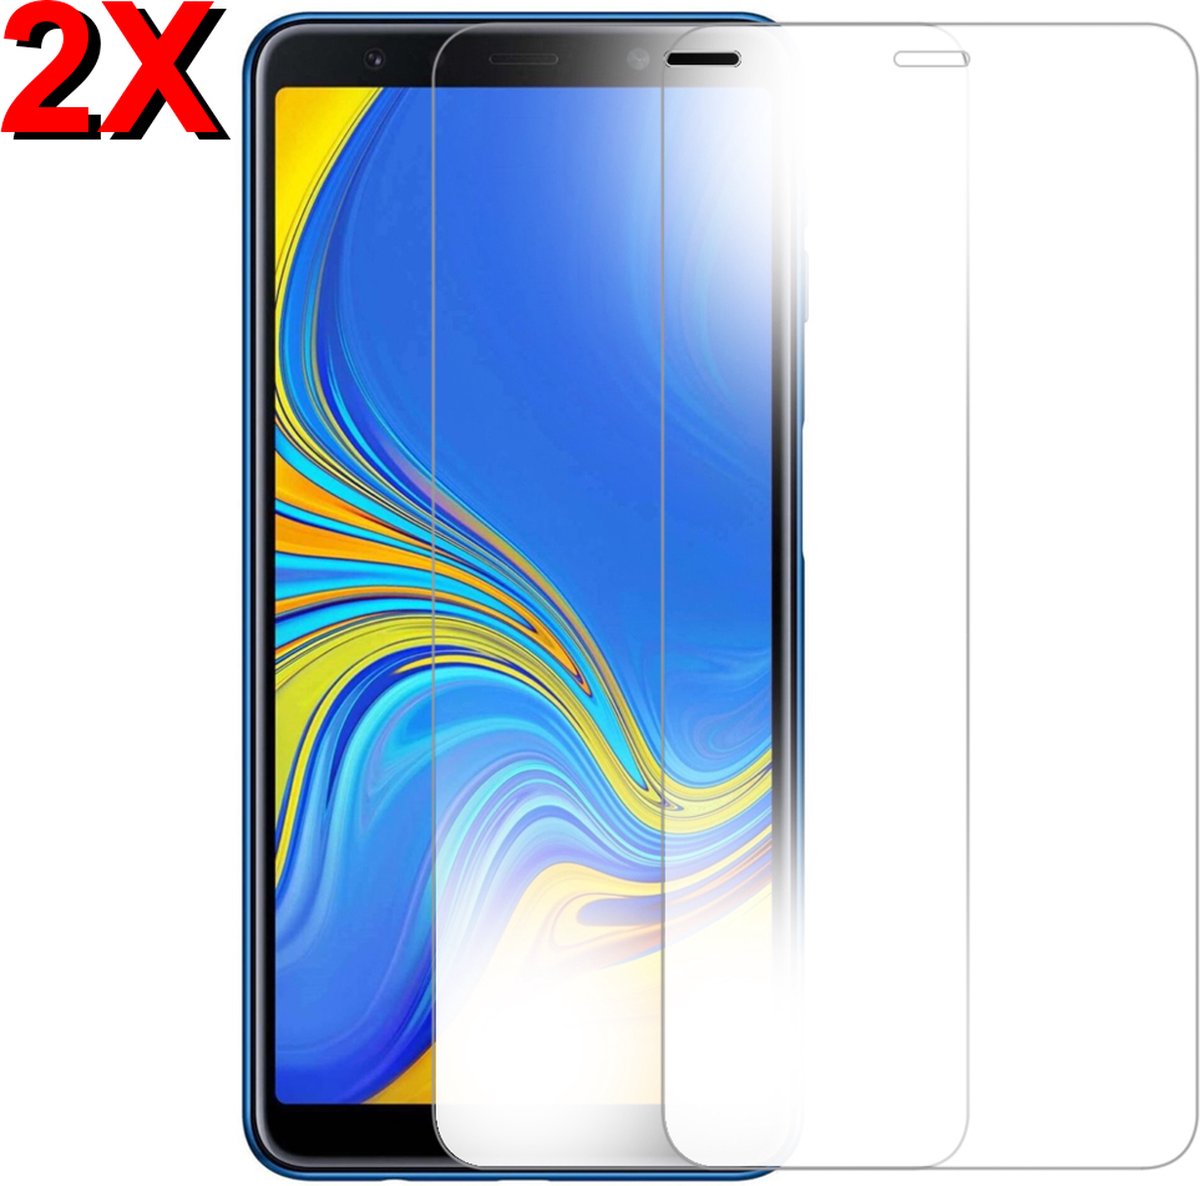 MMOBIEL 2 stuks Glazen Screenprotector voor Samsung Galaxy A7 A750 2018 - 6.0 inch - Tempered Gehard Glas - Inclusief Cleaning Set